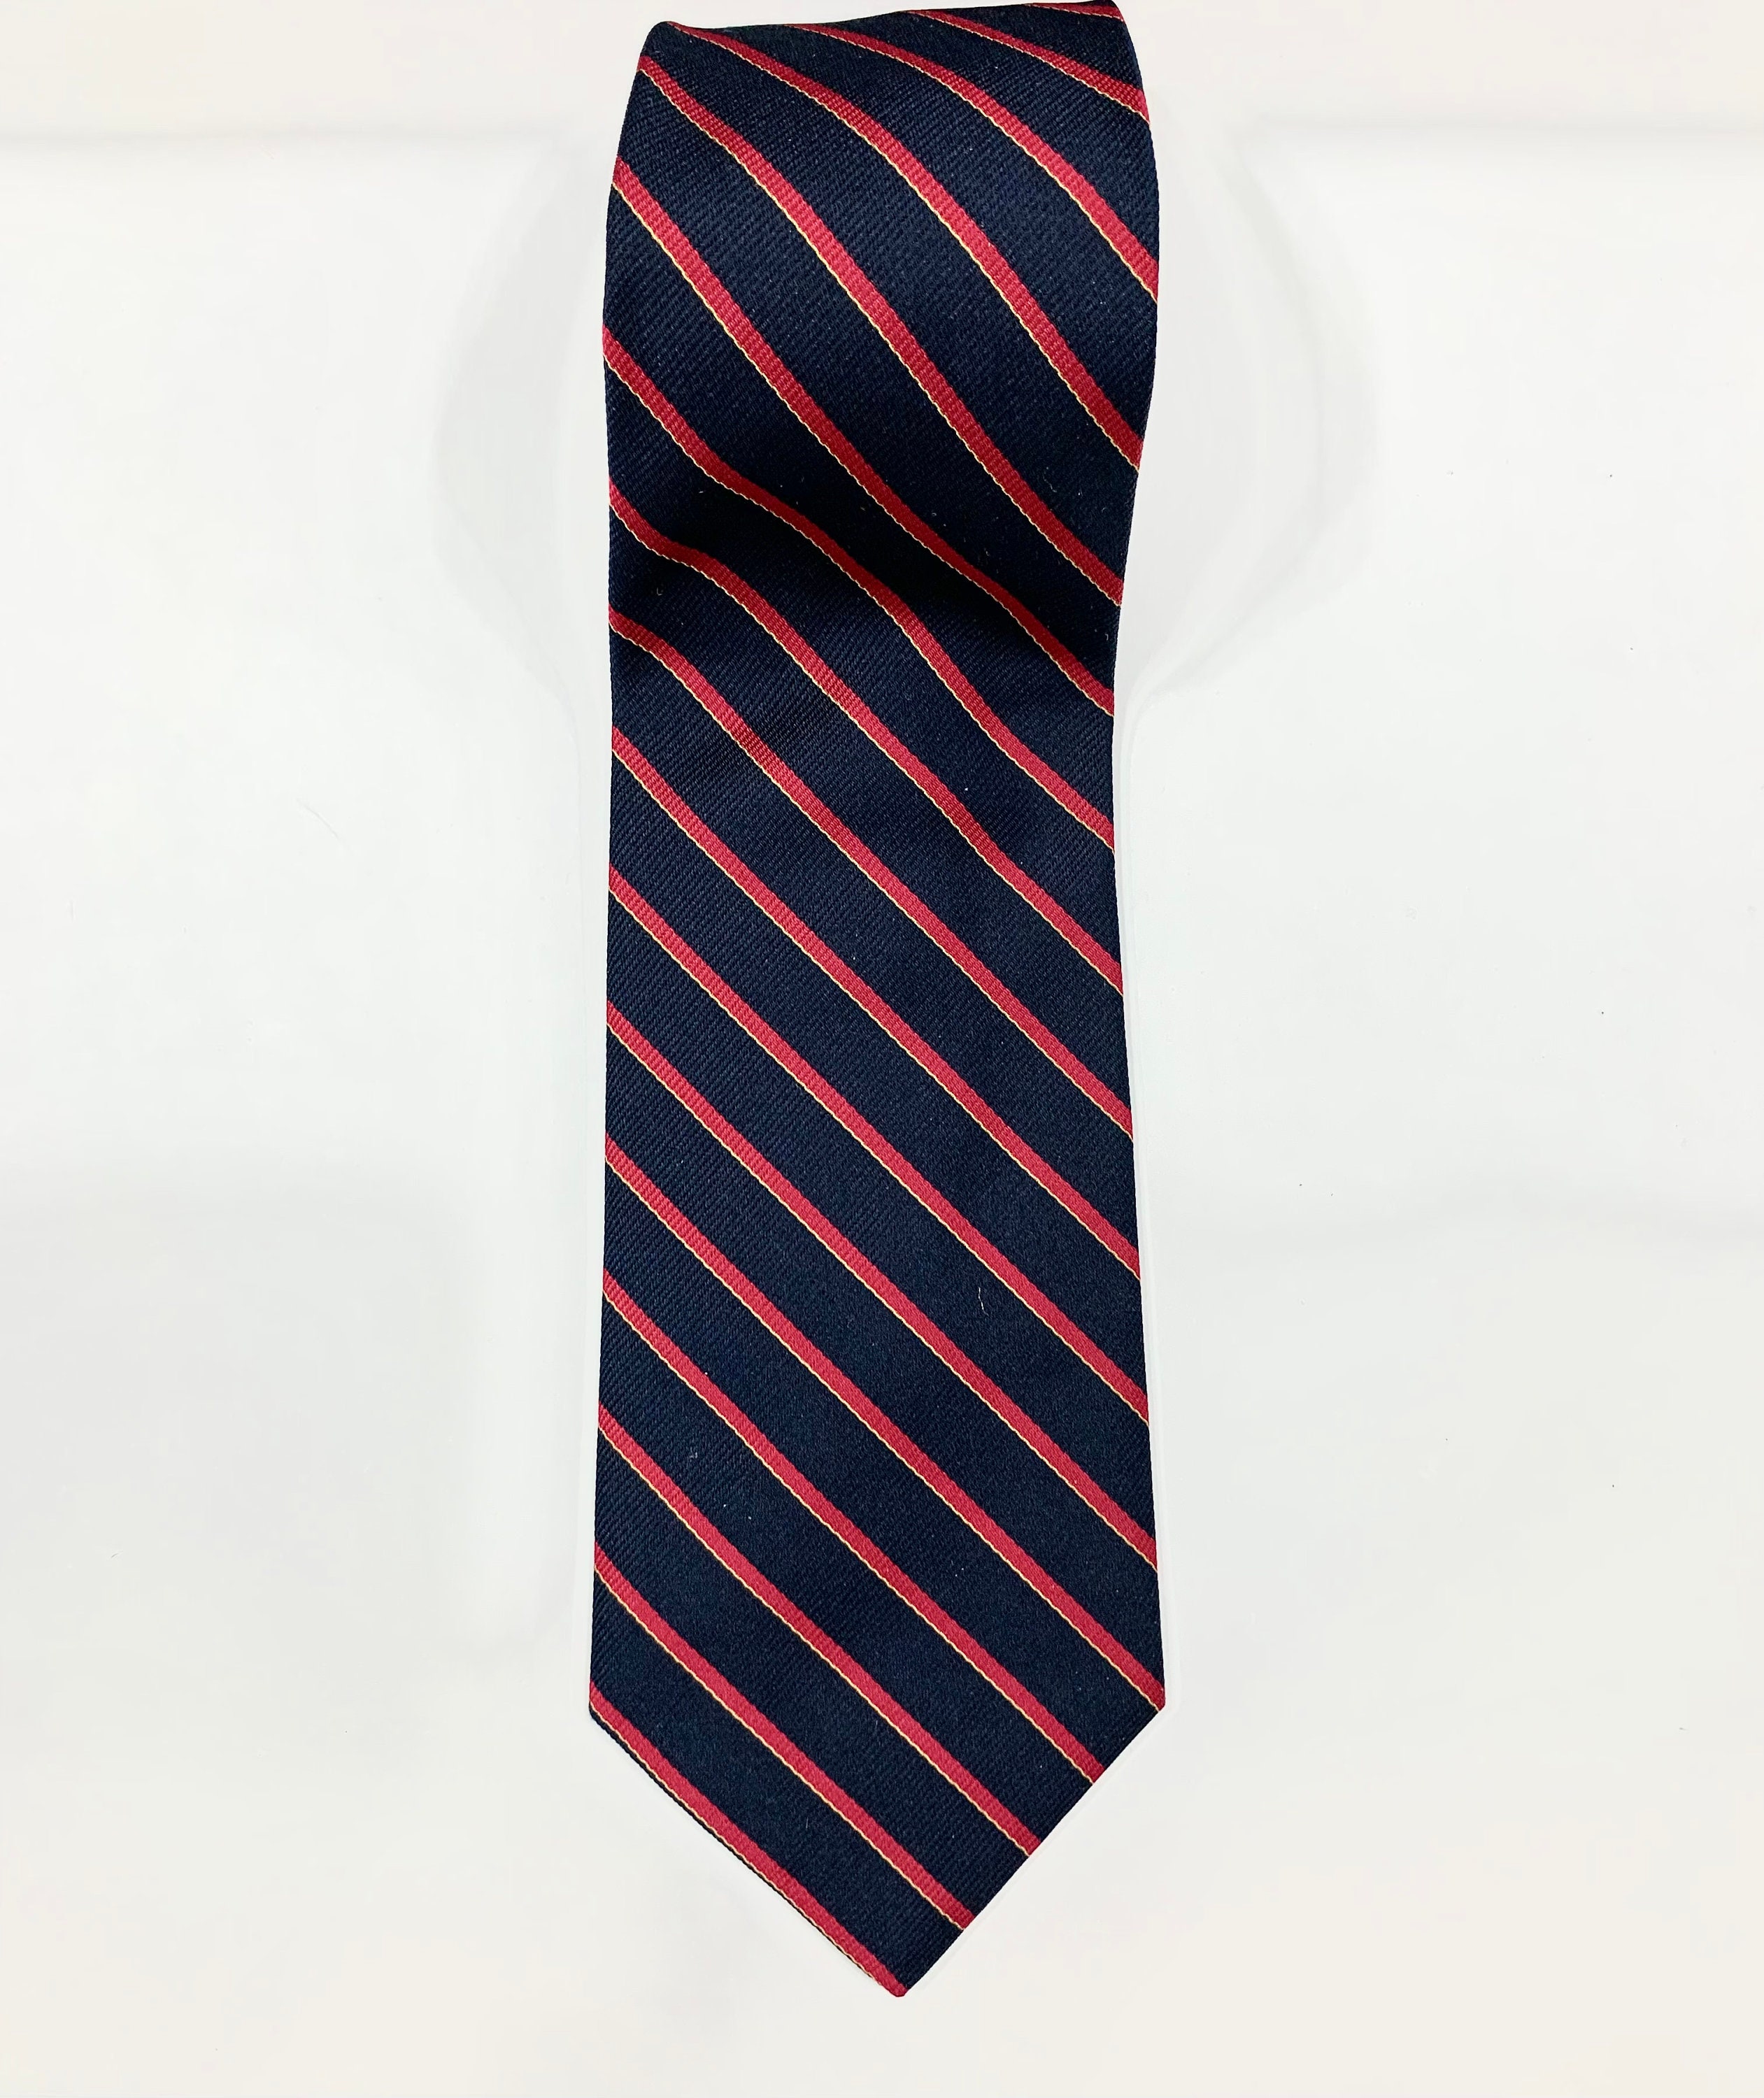 Brooks Brothers Black & Red Striped Silk Tie, Retro Men's Tie ...